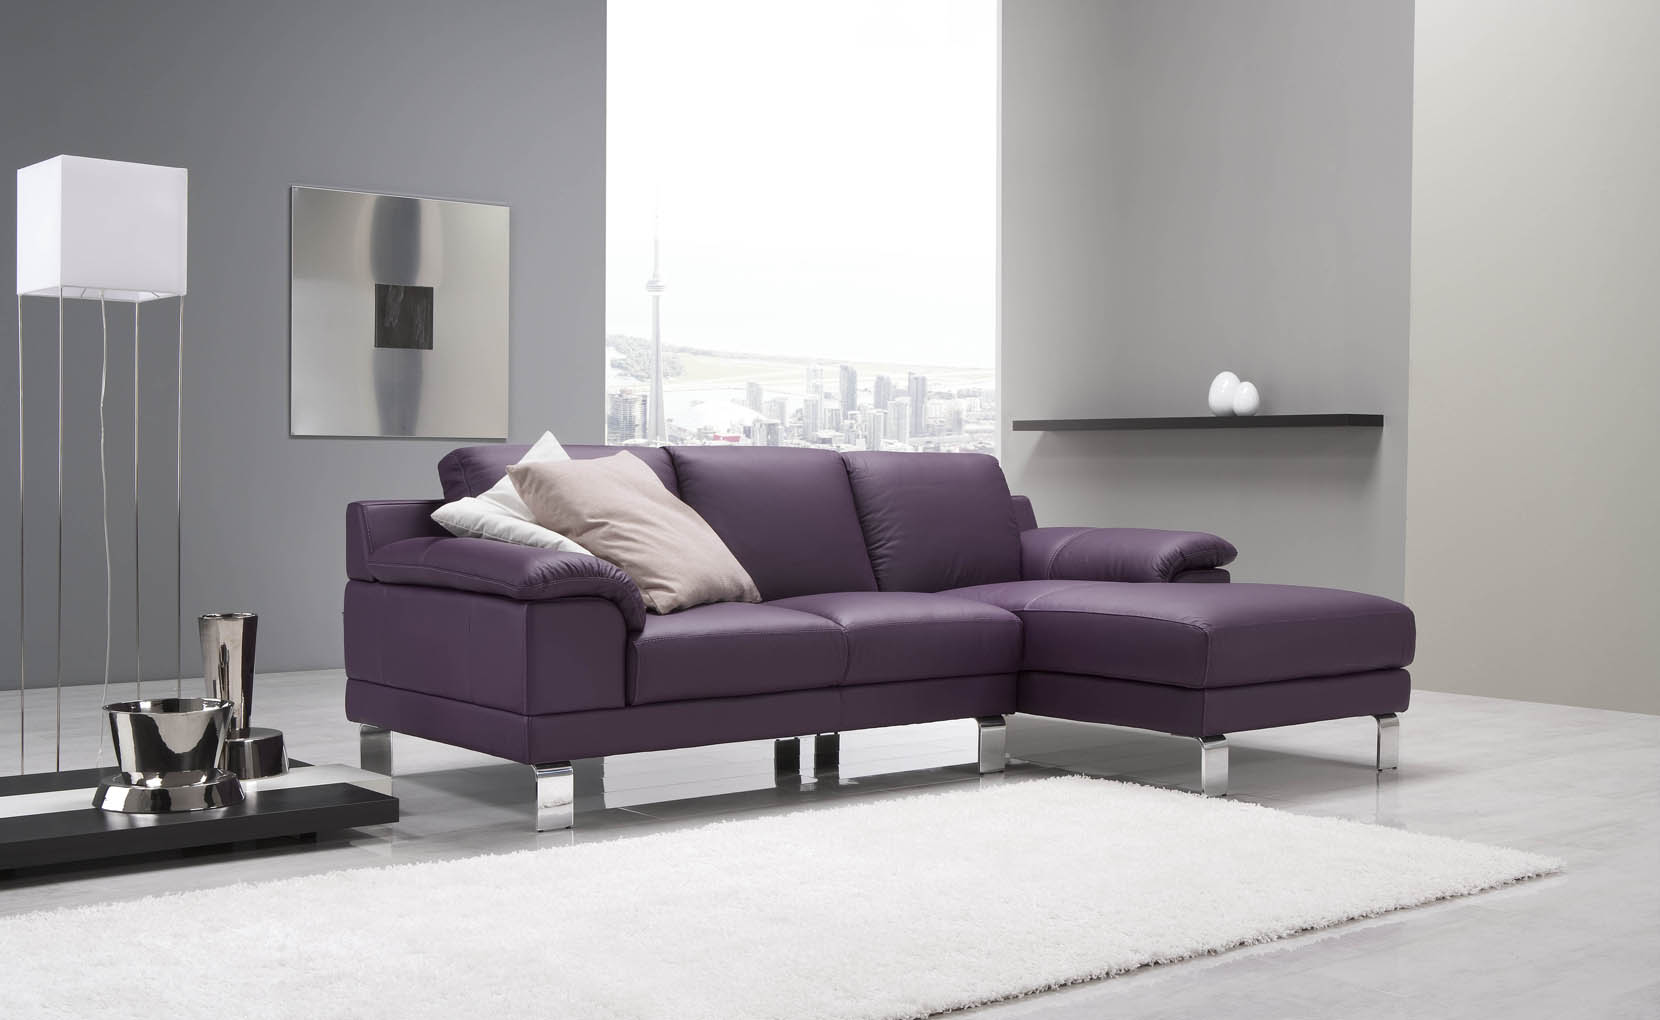 The Sofa available Ego Ultimate at Company. Free Living Italiano